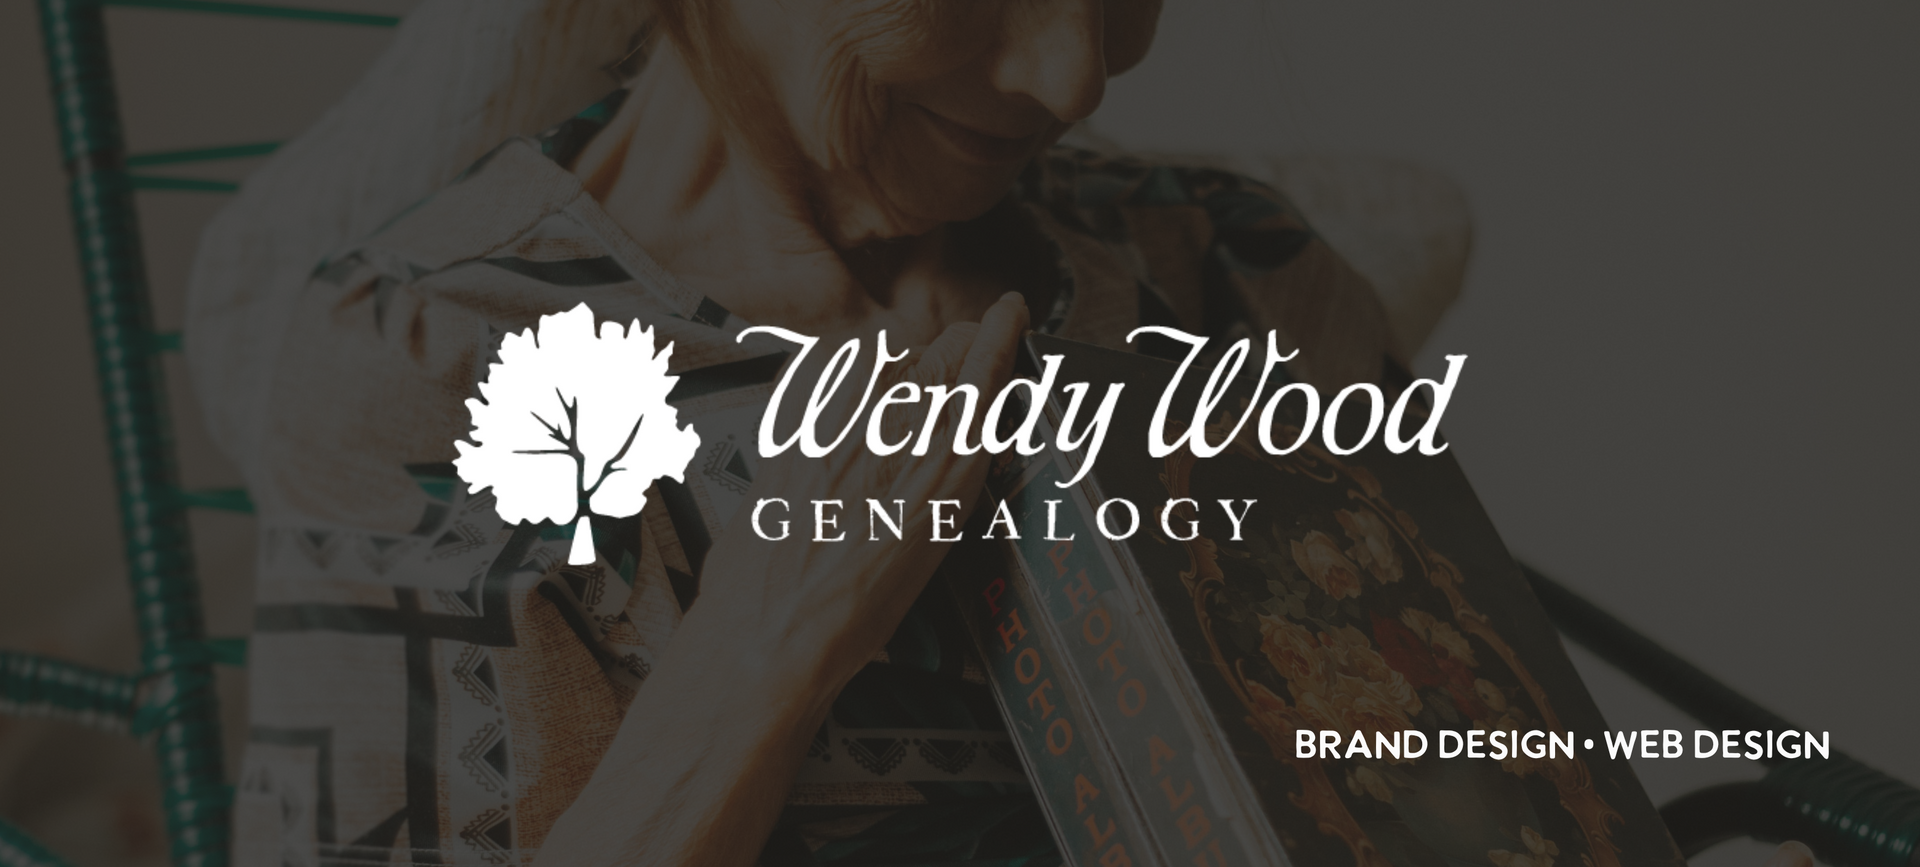 wendy wood genealogy website custom build a new website builder